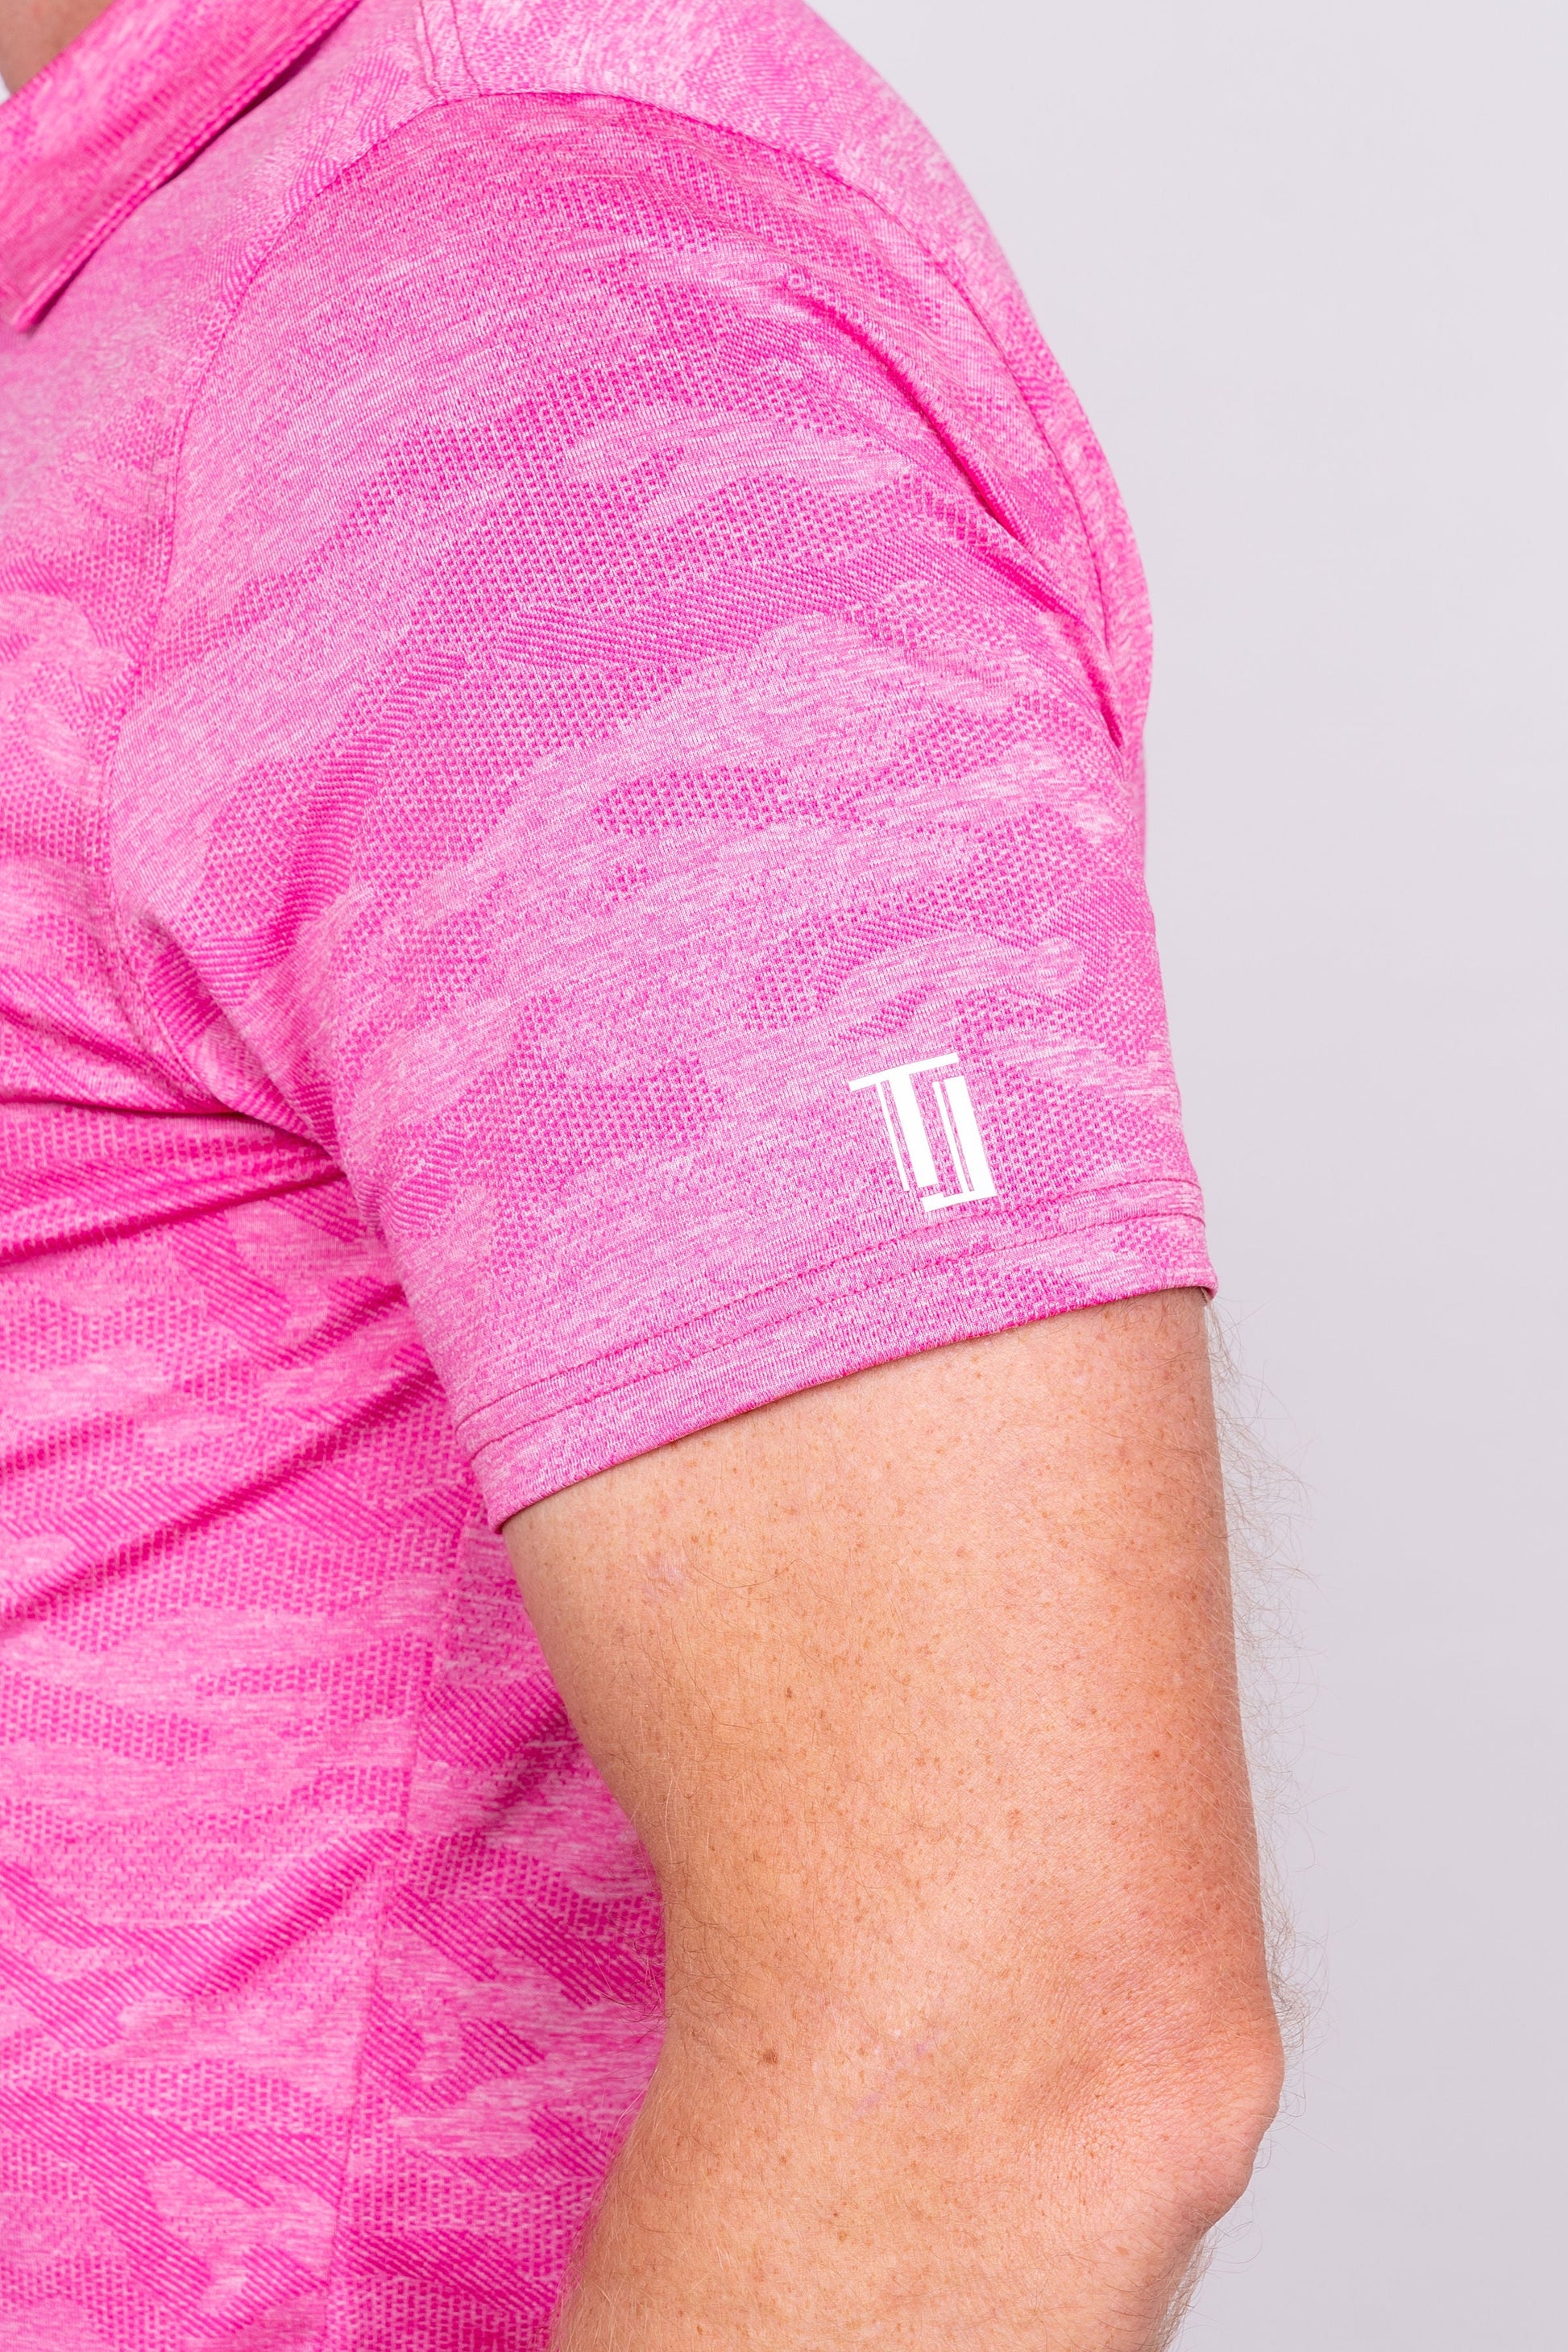 Ghost Camouflage - Pink Men's Golf Shirt Taylor Jordan Apparel 